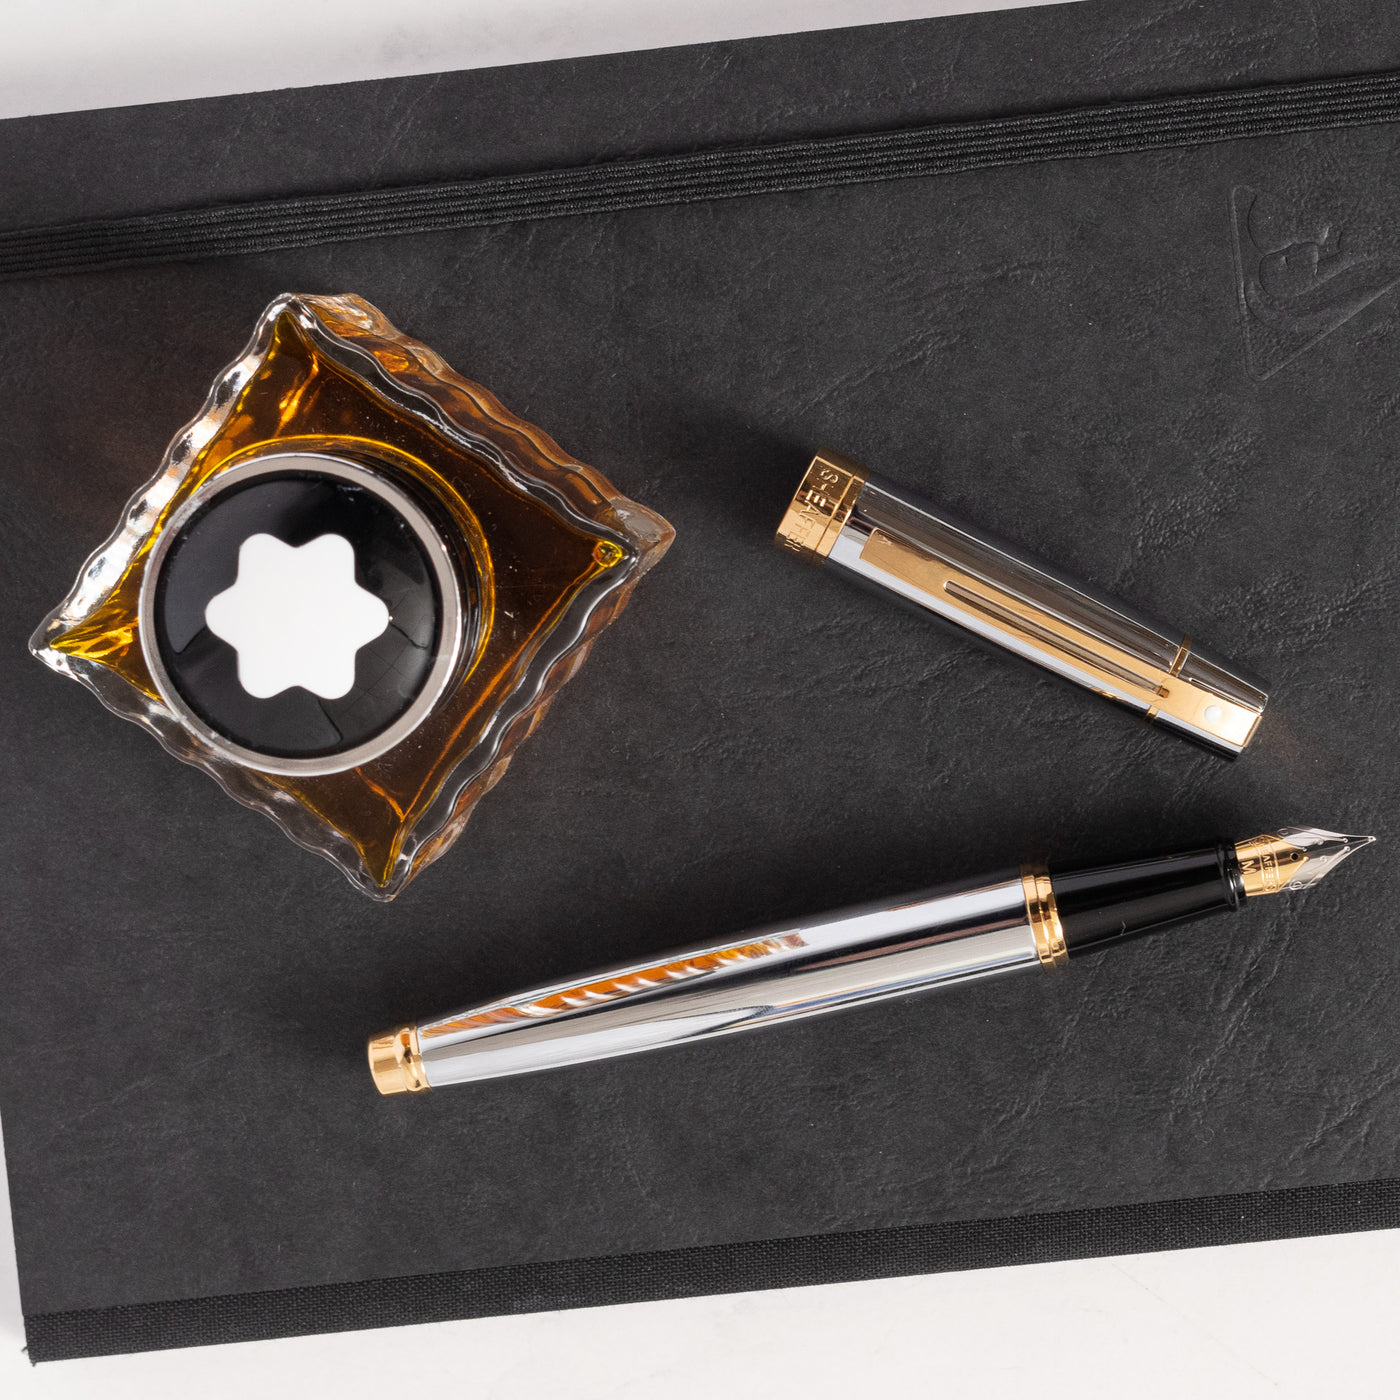 Sheaffer 300 Fountain Pen - Chrome with Gold Trim metal